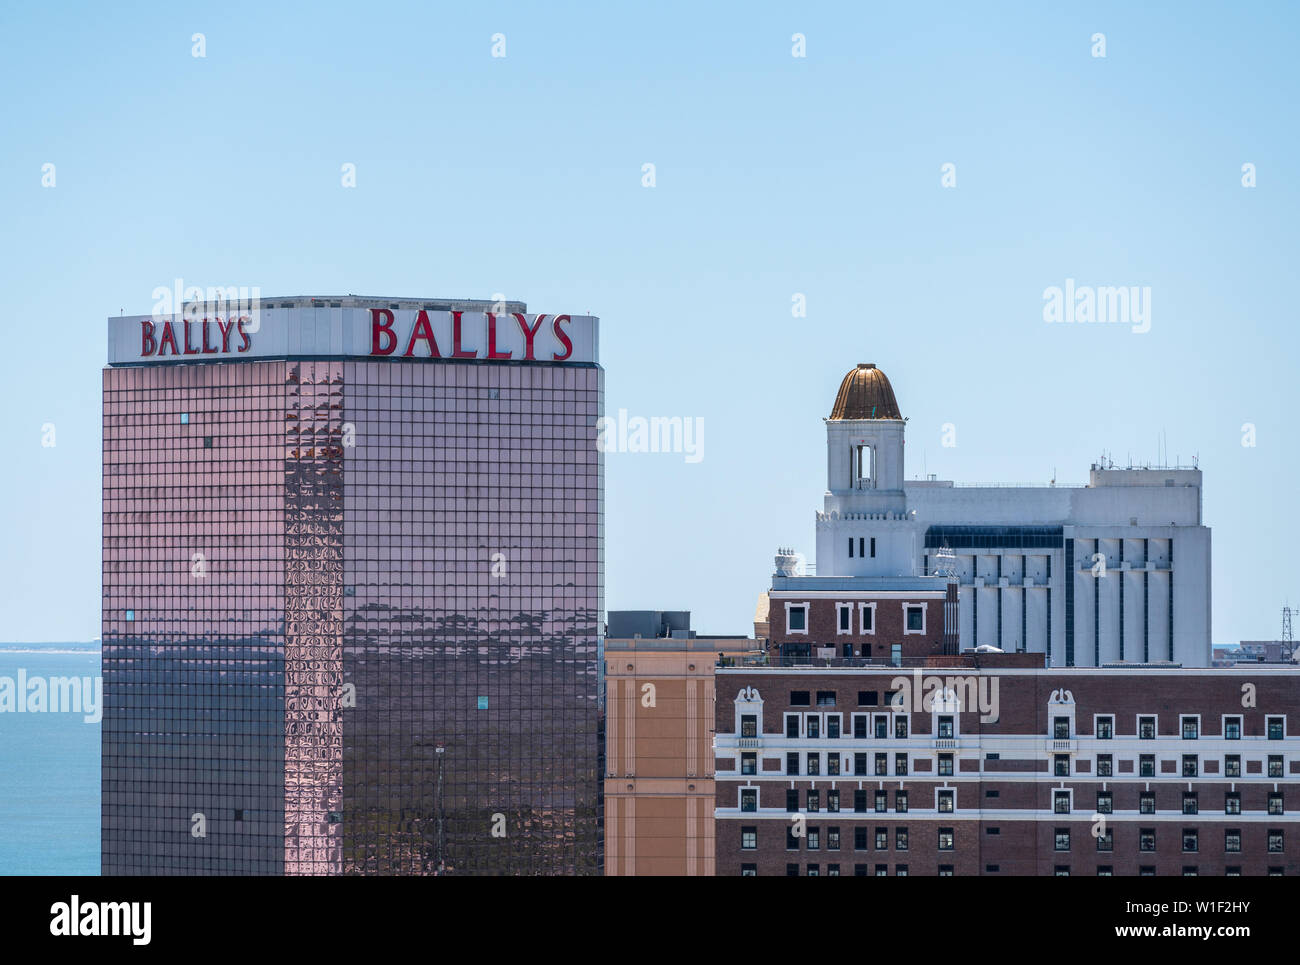 Ballys Casino in Atlantic City on New Jersey coastline Stock Photo